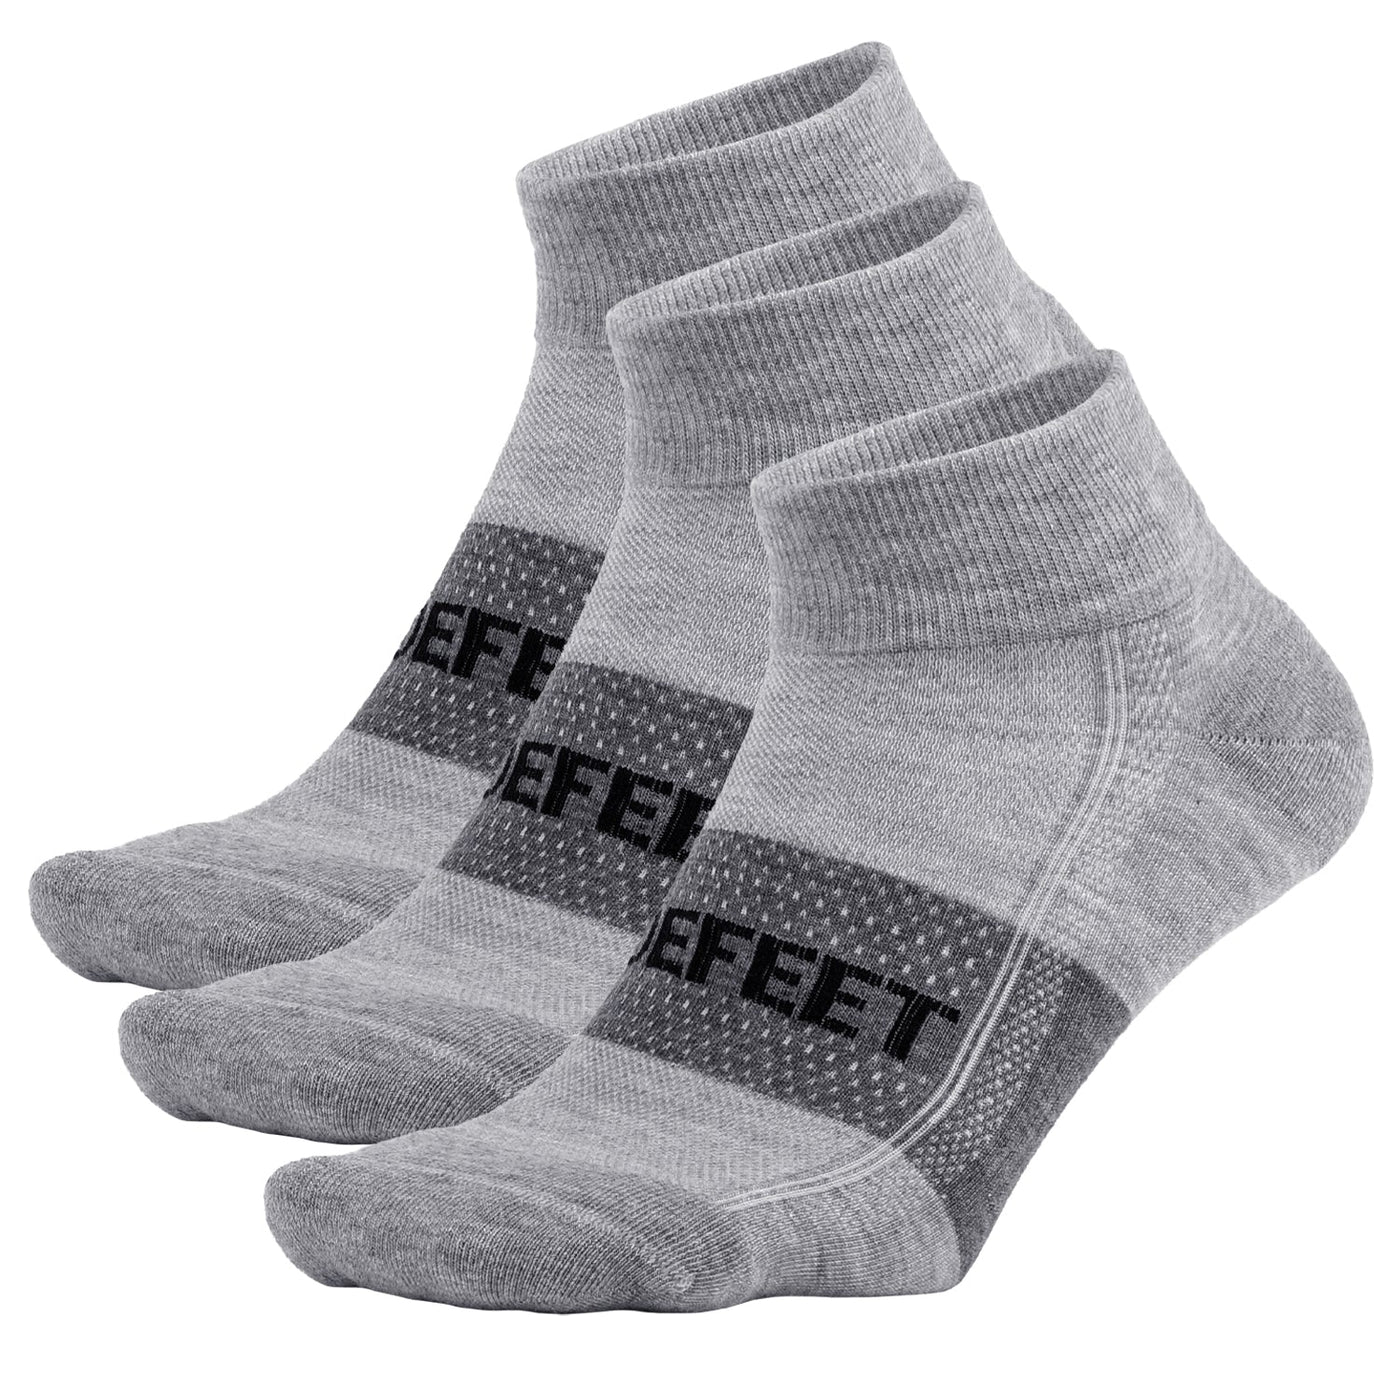 Speede Pro 1" Sport Socks Bundle: 3 Pairs - DeFeet